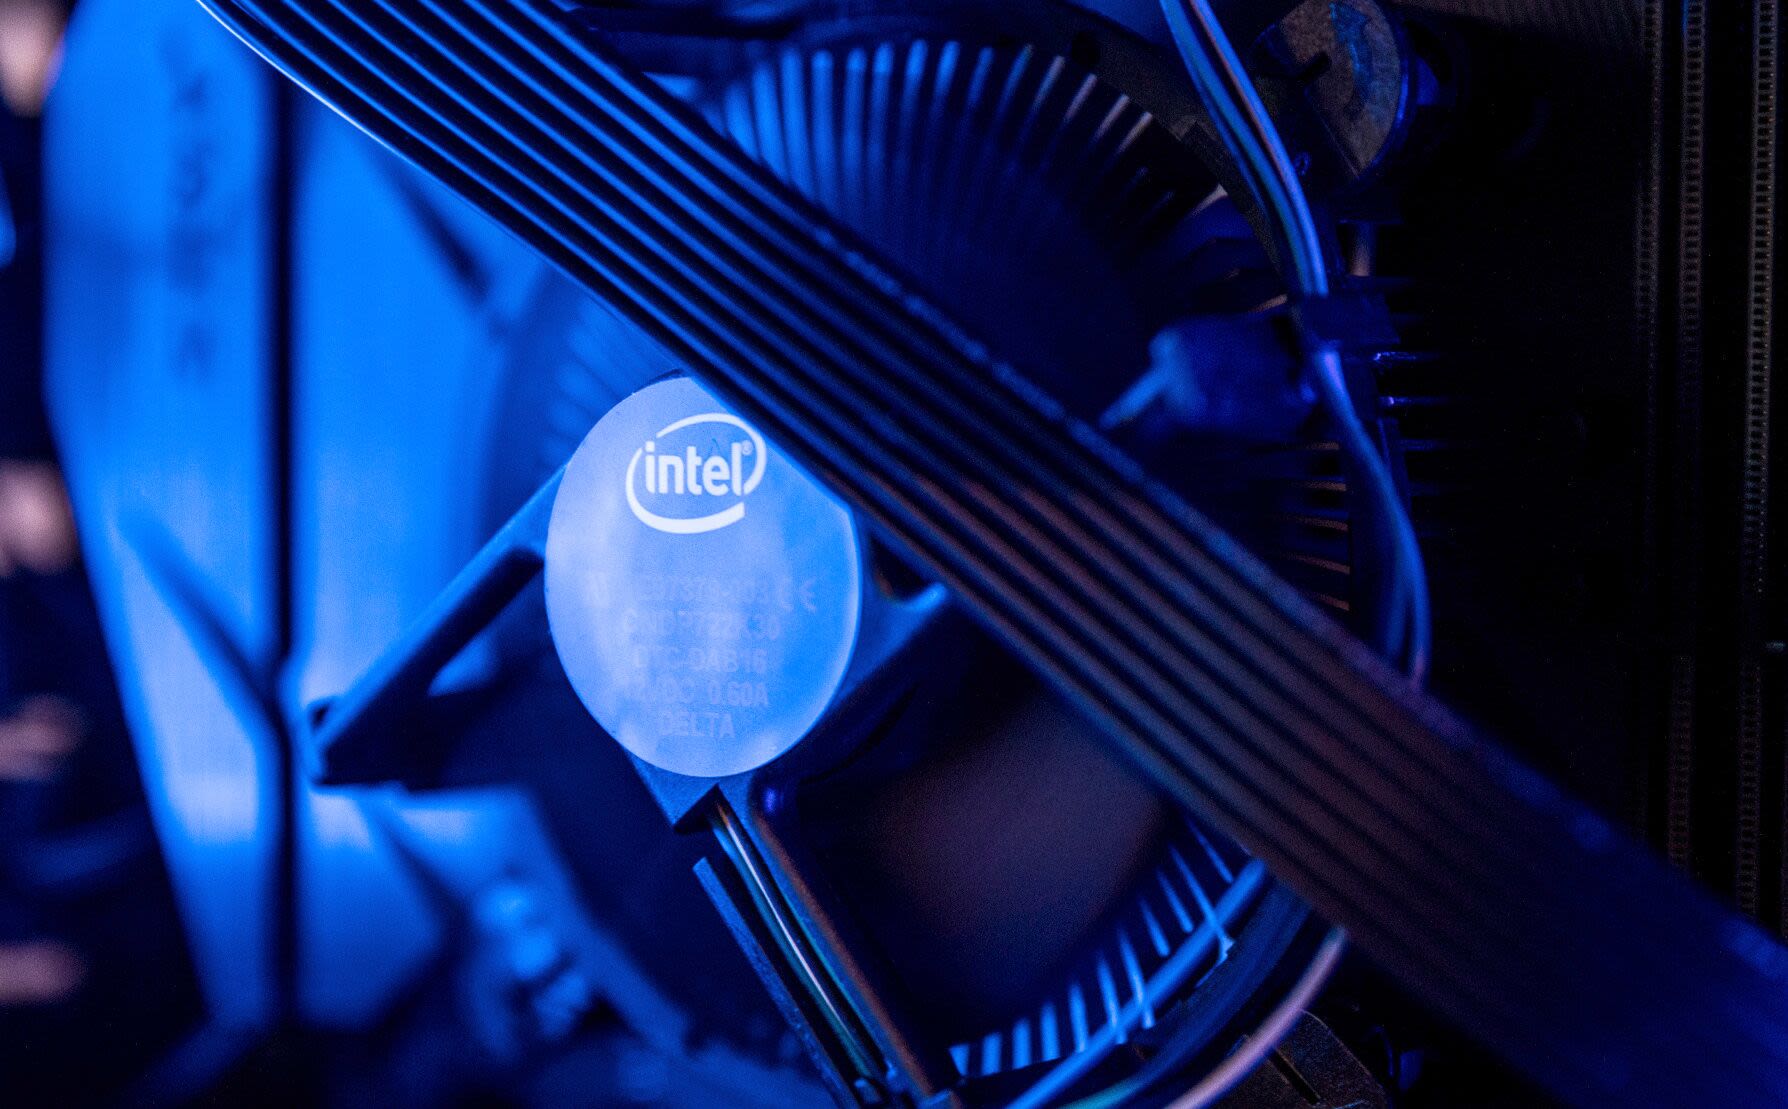 Intel, Apollo Near $11 Billion Ireland Plant Deal, WSJ Says